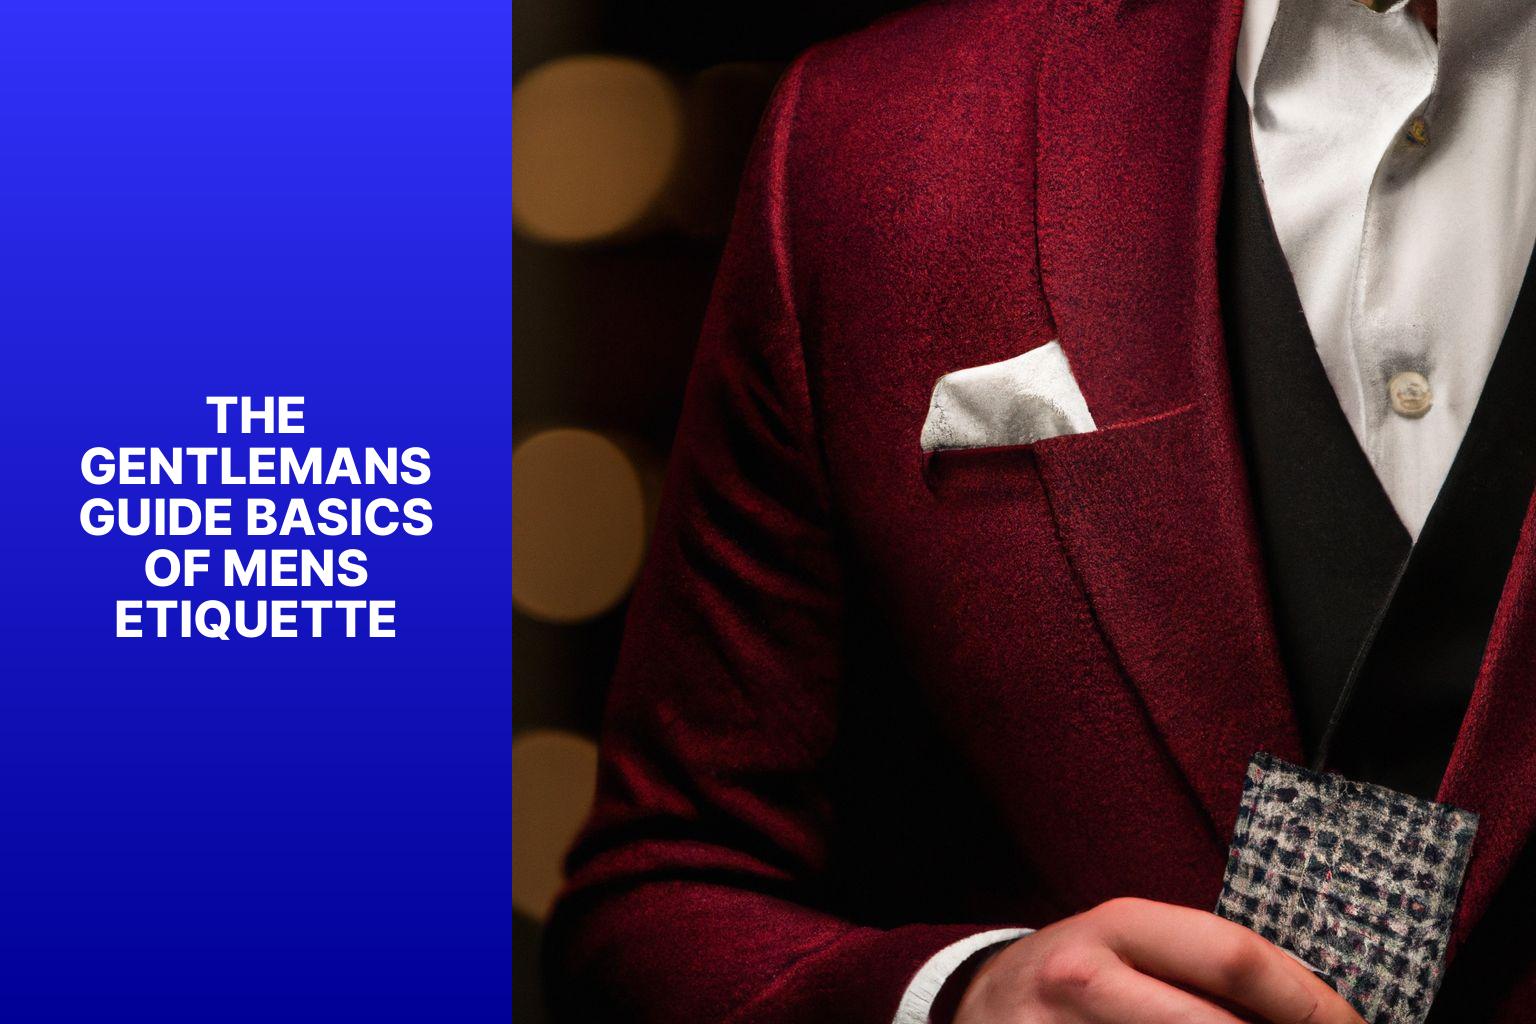 The Gentleman’s Guide: Basics of Men’s Etiquette